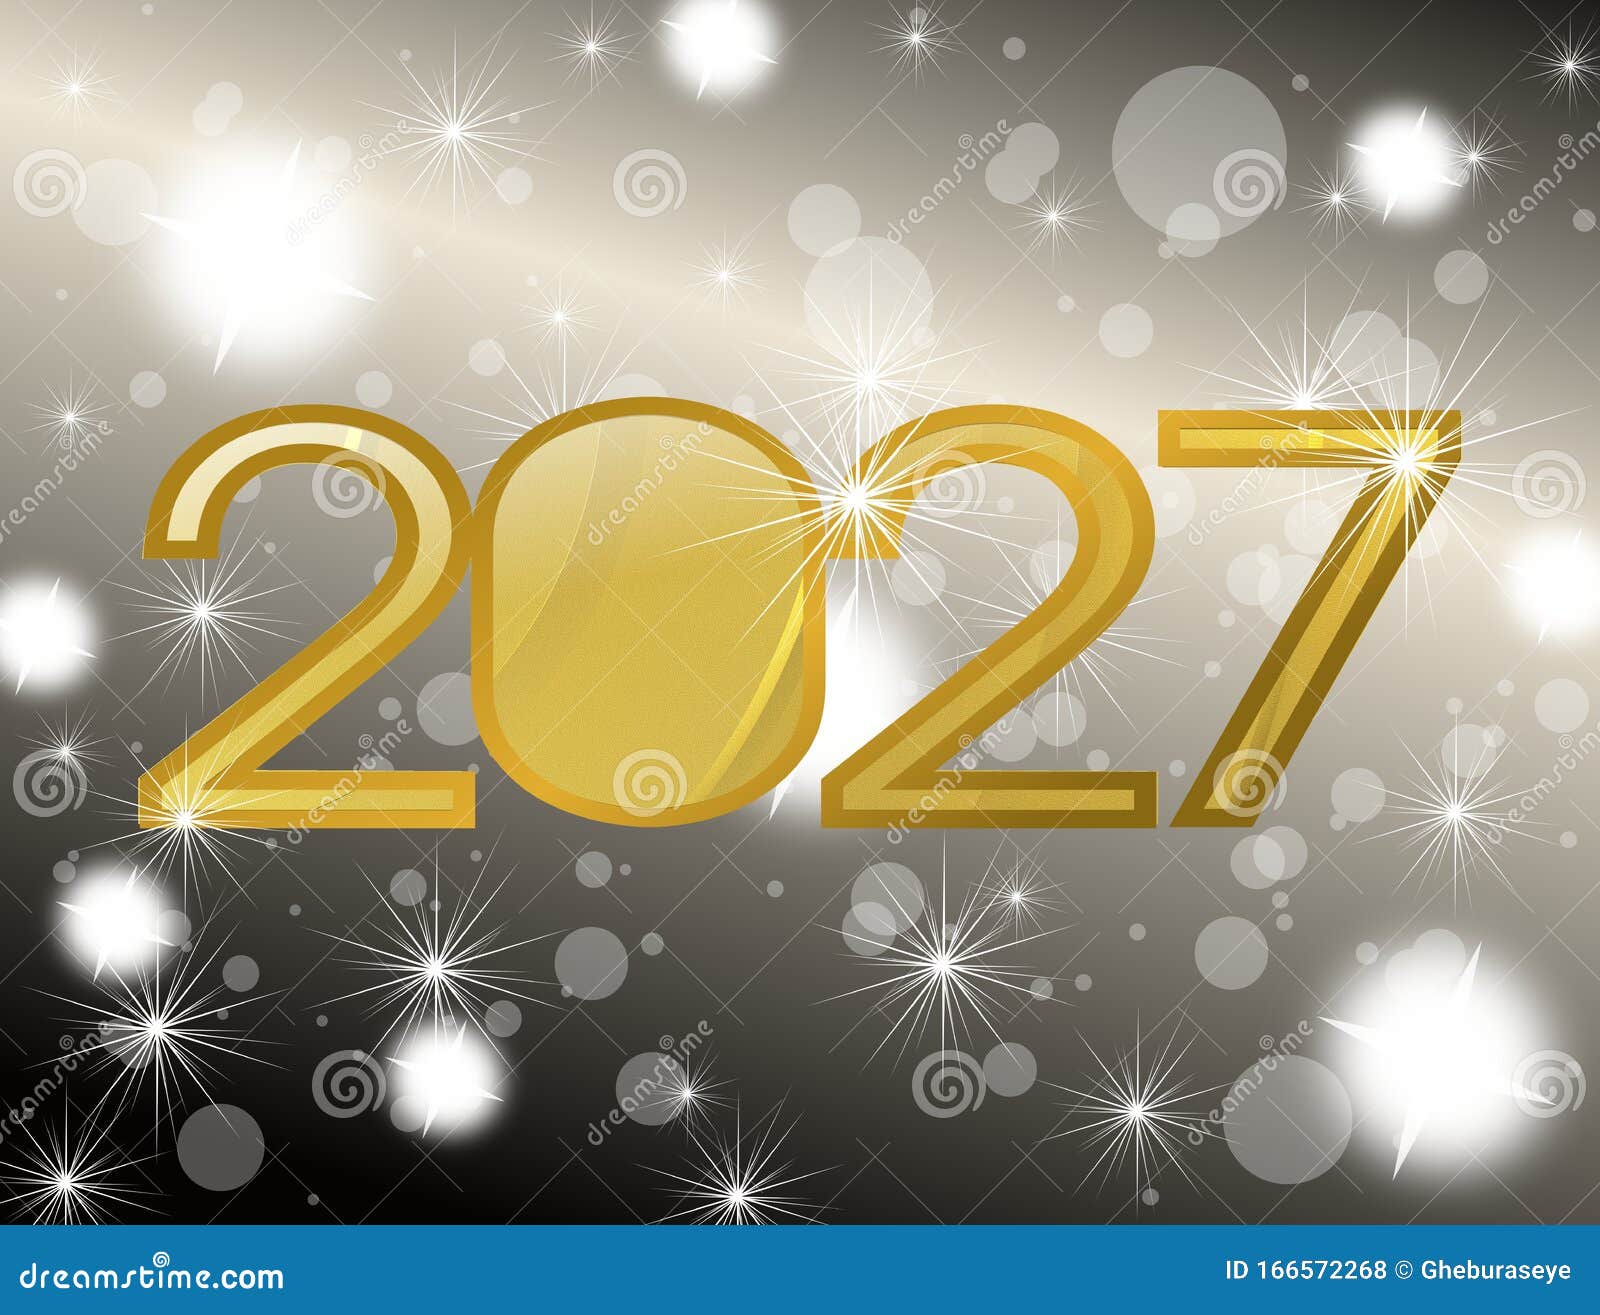 Прогнозы на 2027 год. 2027 Год. 2027 Год картинки. Фото новый год 2027 года. 2027 Год год кого.